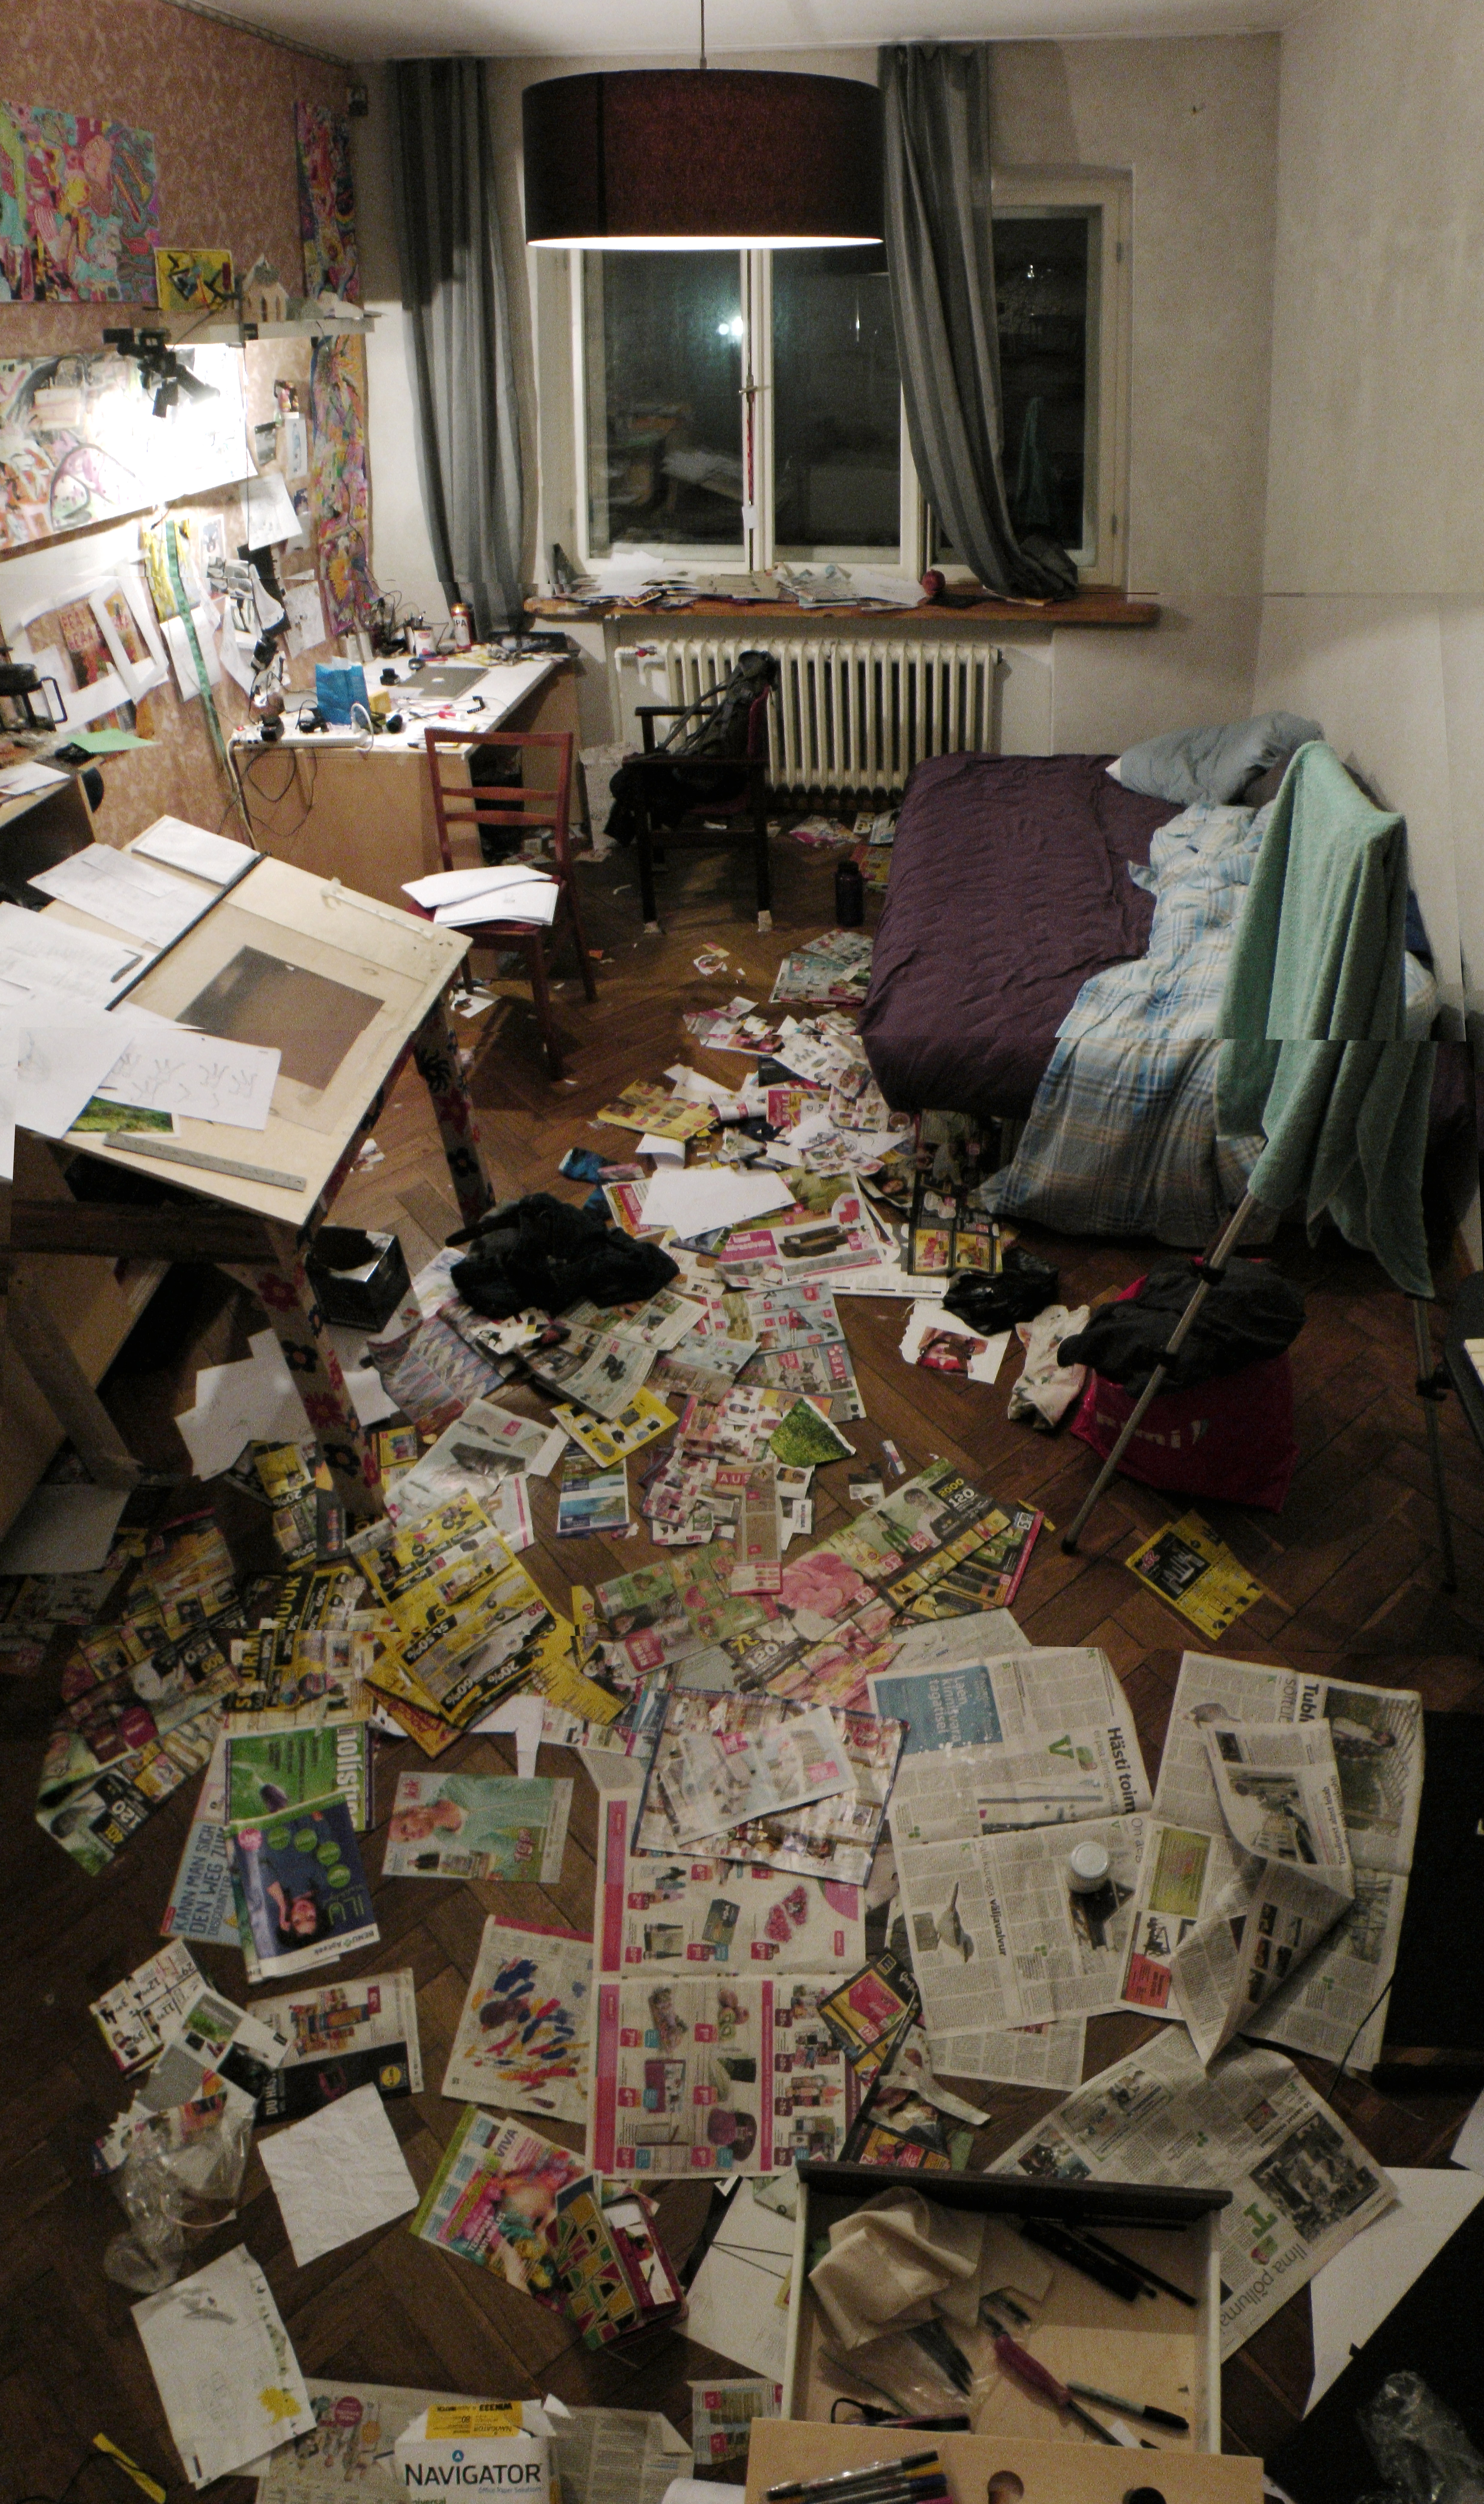 Messy apartment